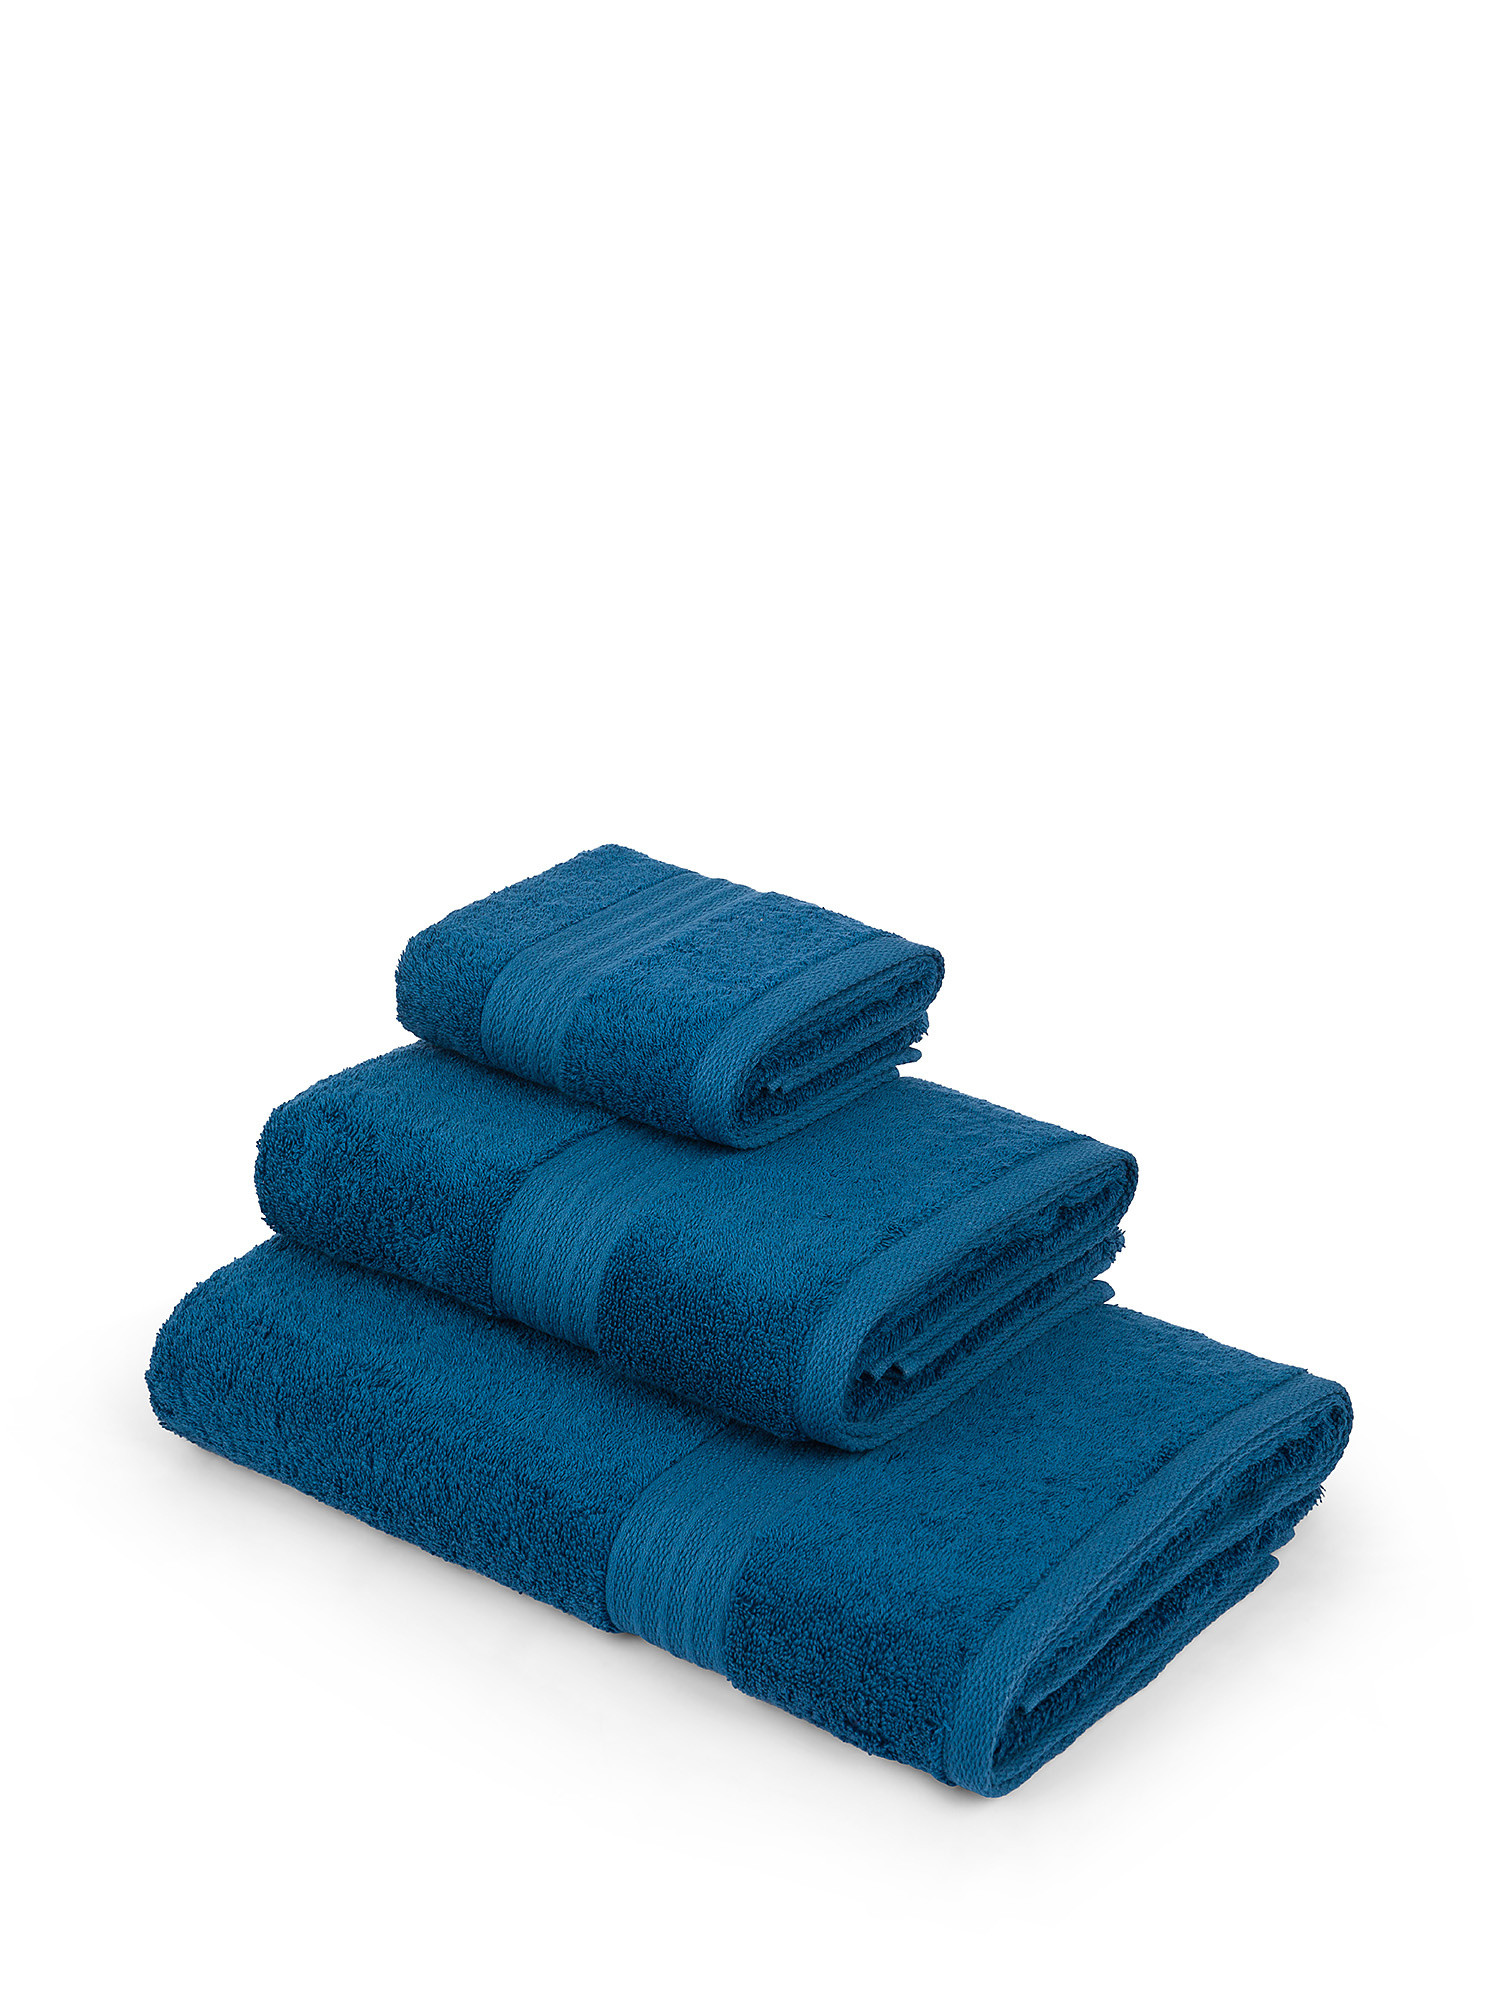 Asciugamano puro cotone tinta unita Zefiro, Blu, large image number 0